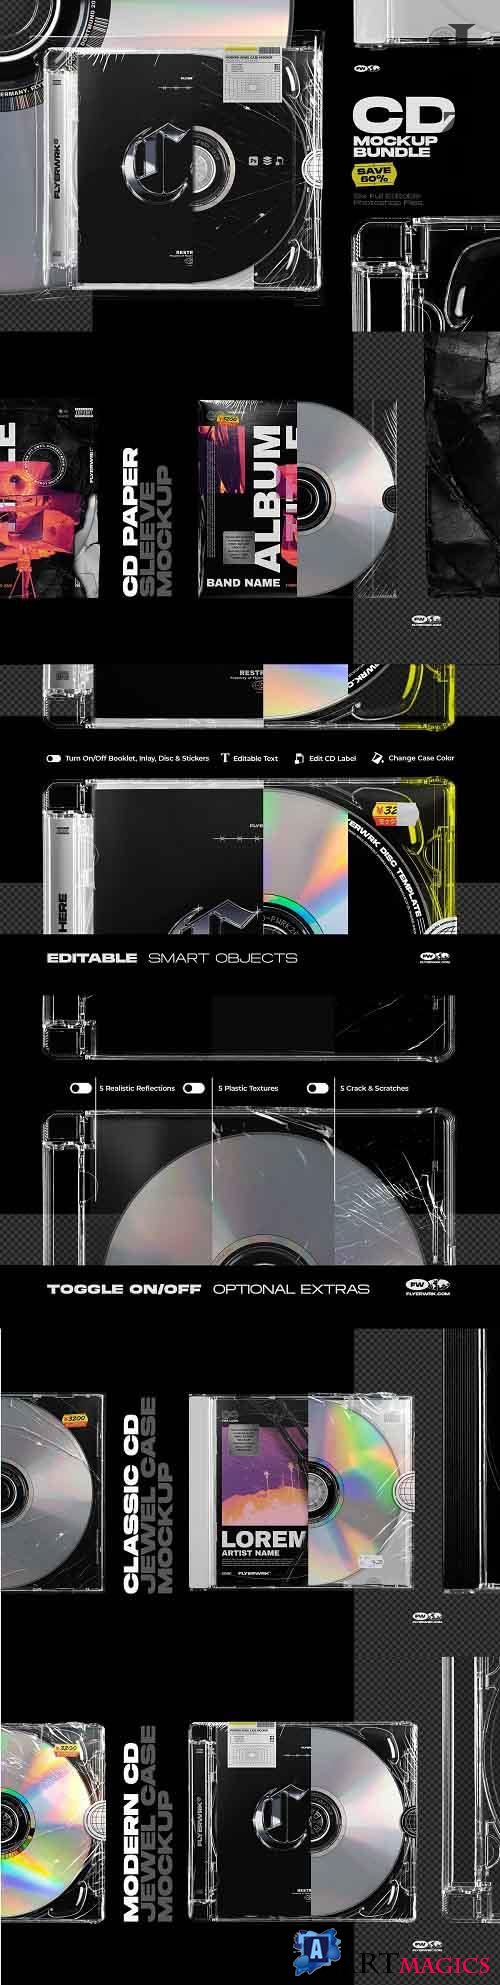 CreativeMarket - CD Mockup Bundle 5485024